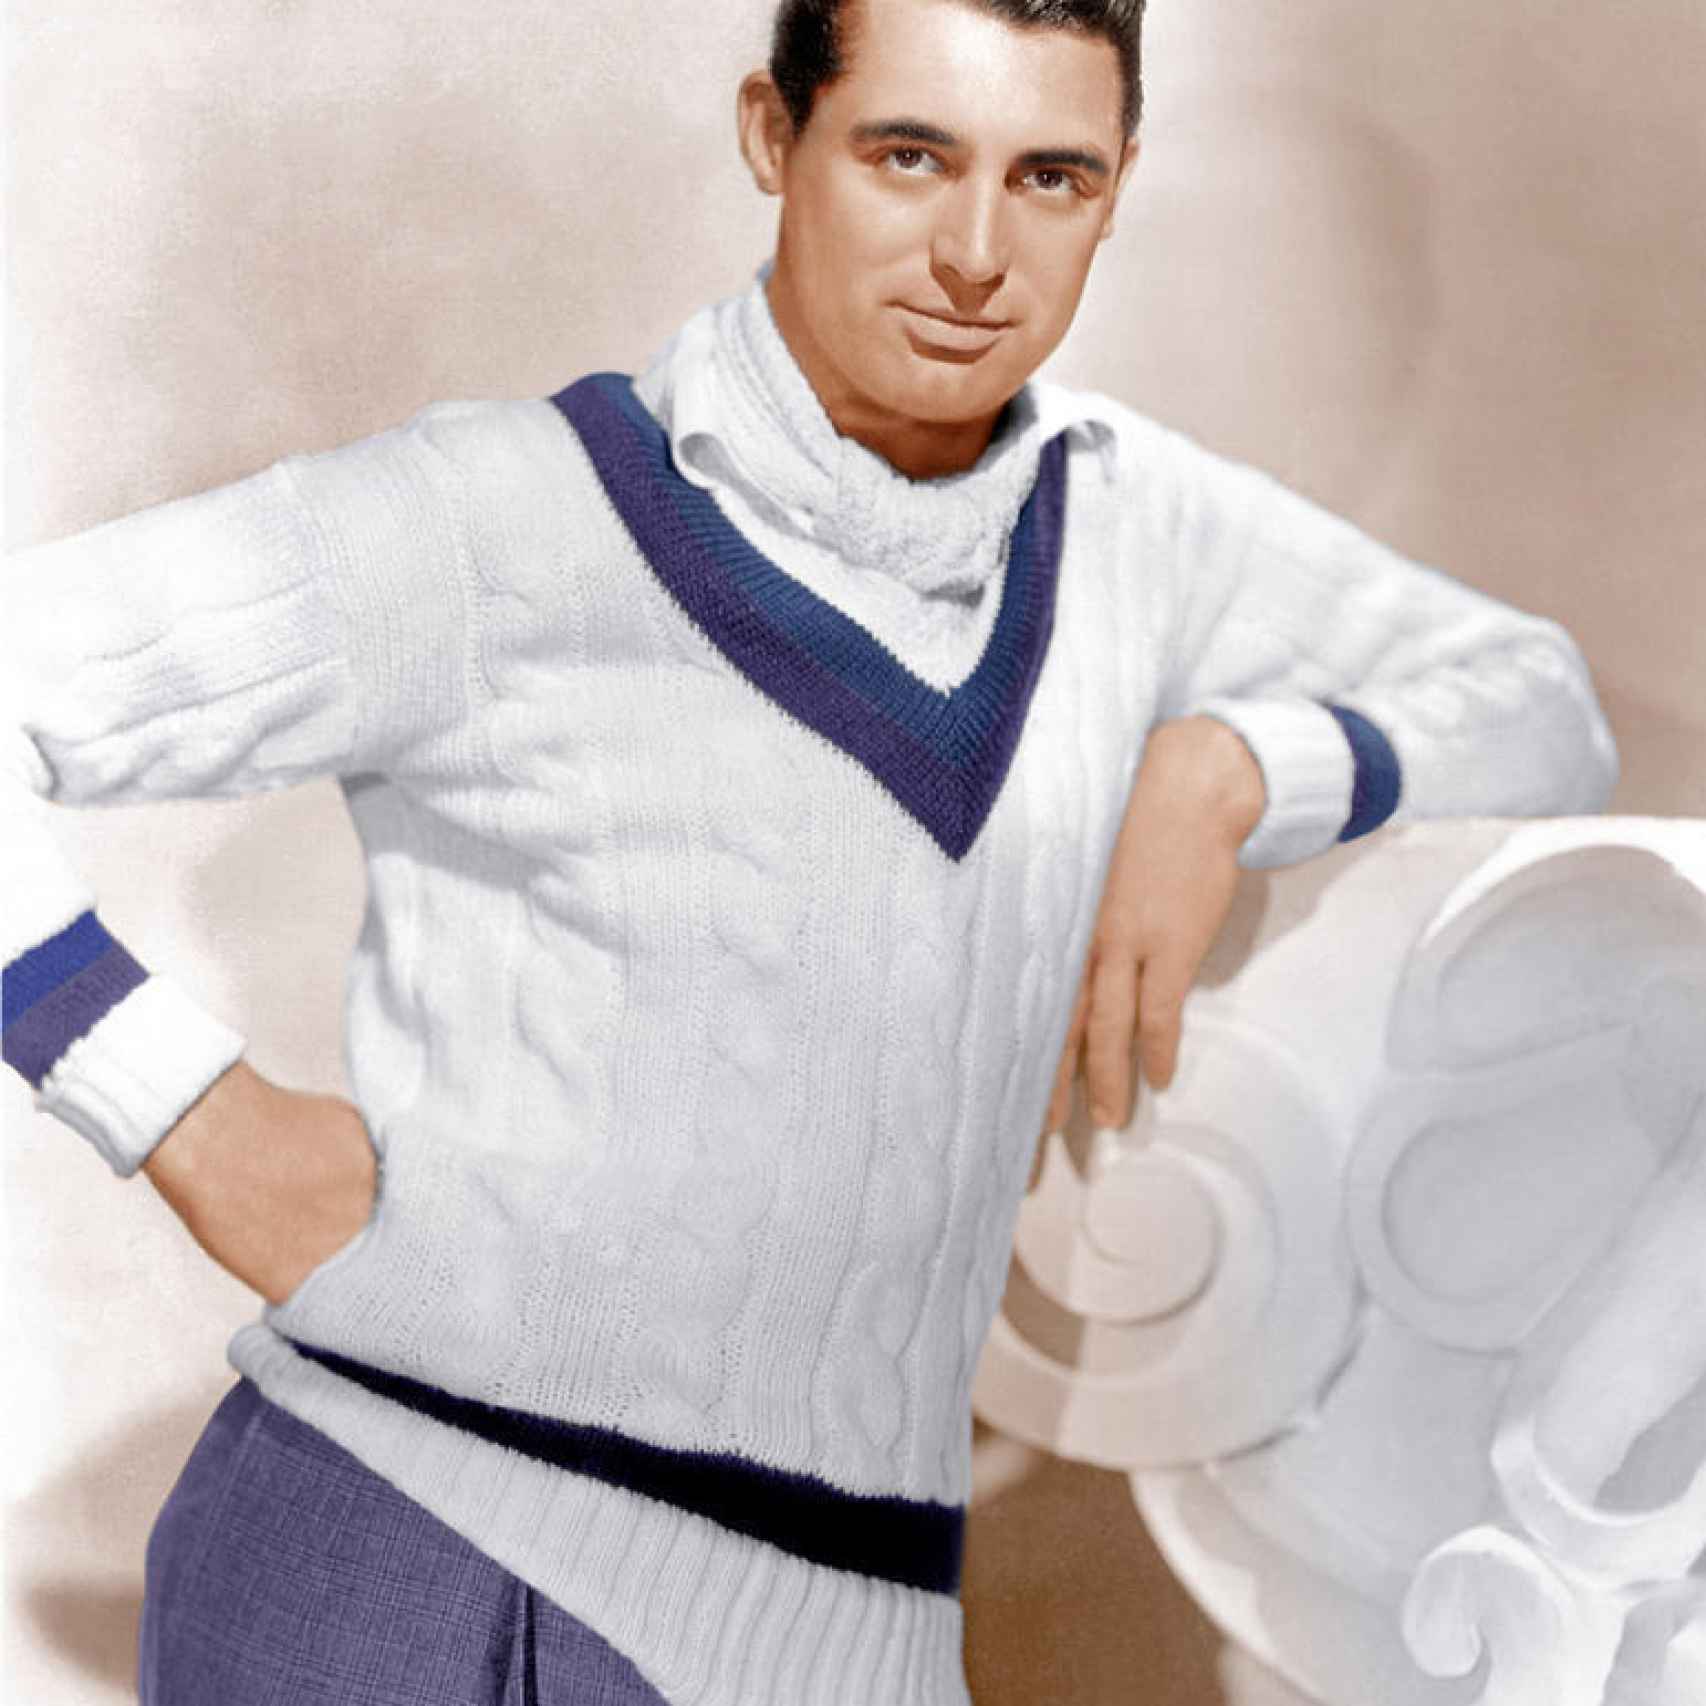 Cary Grant en 1934